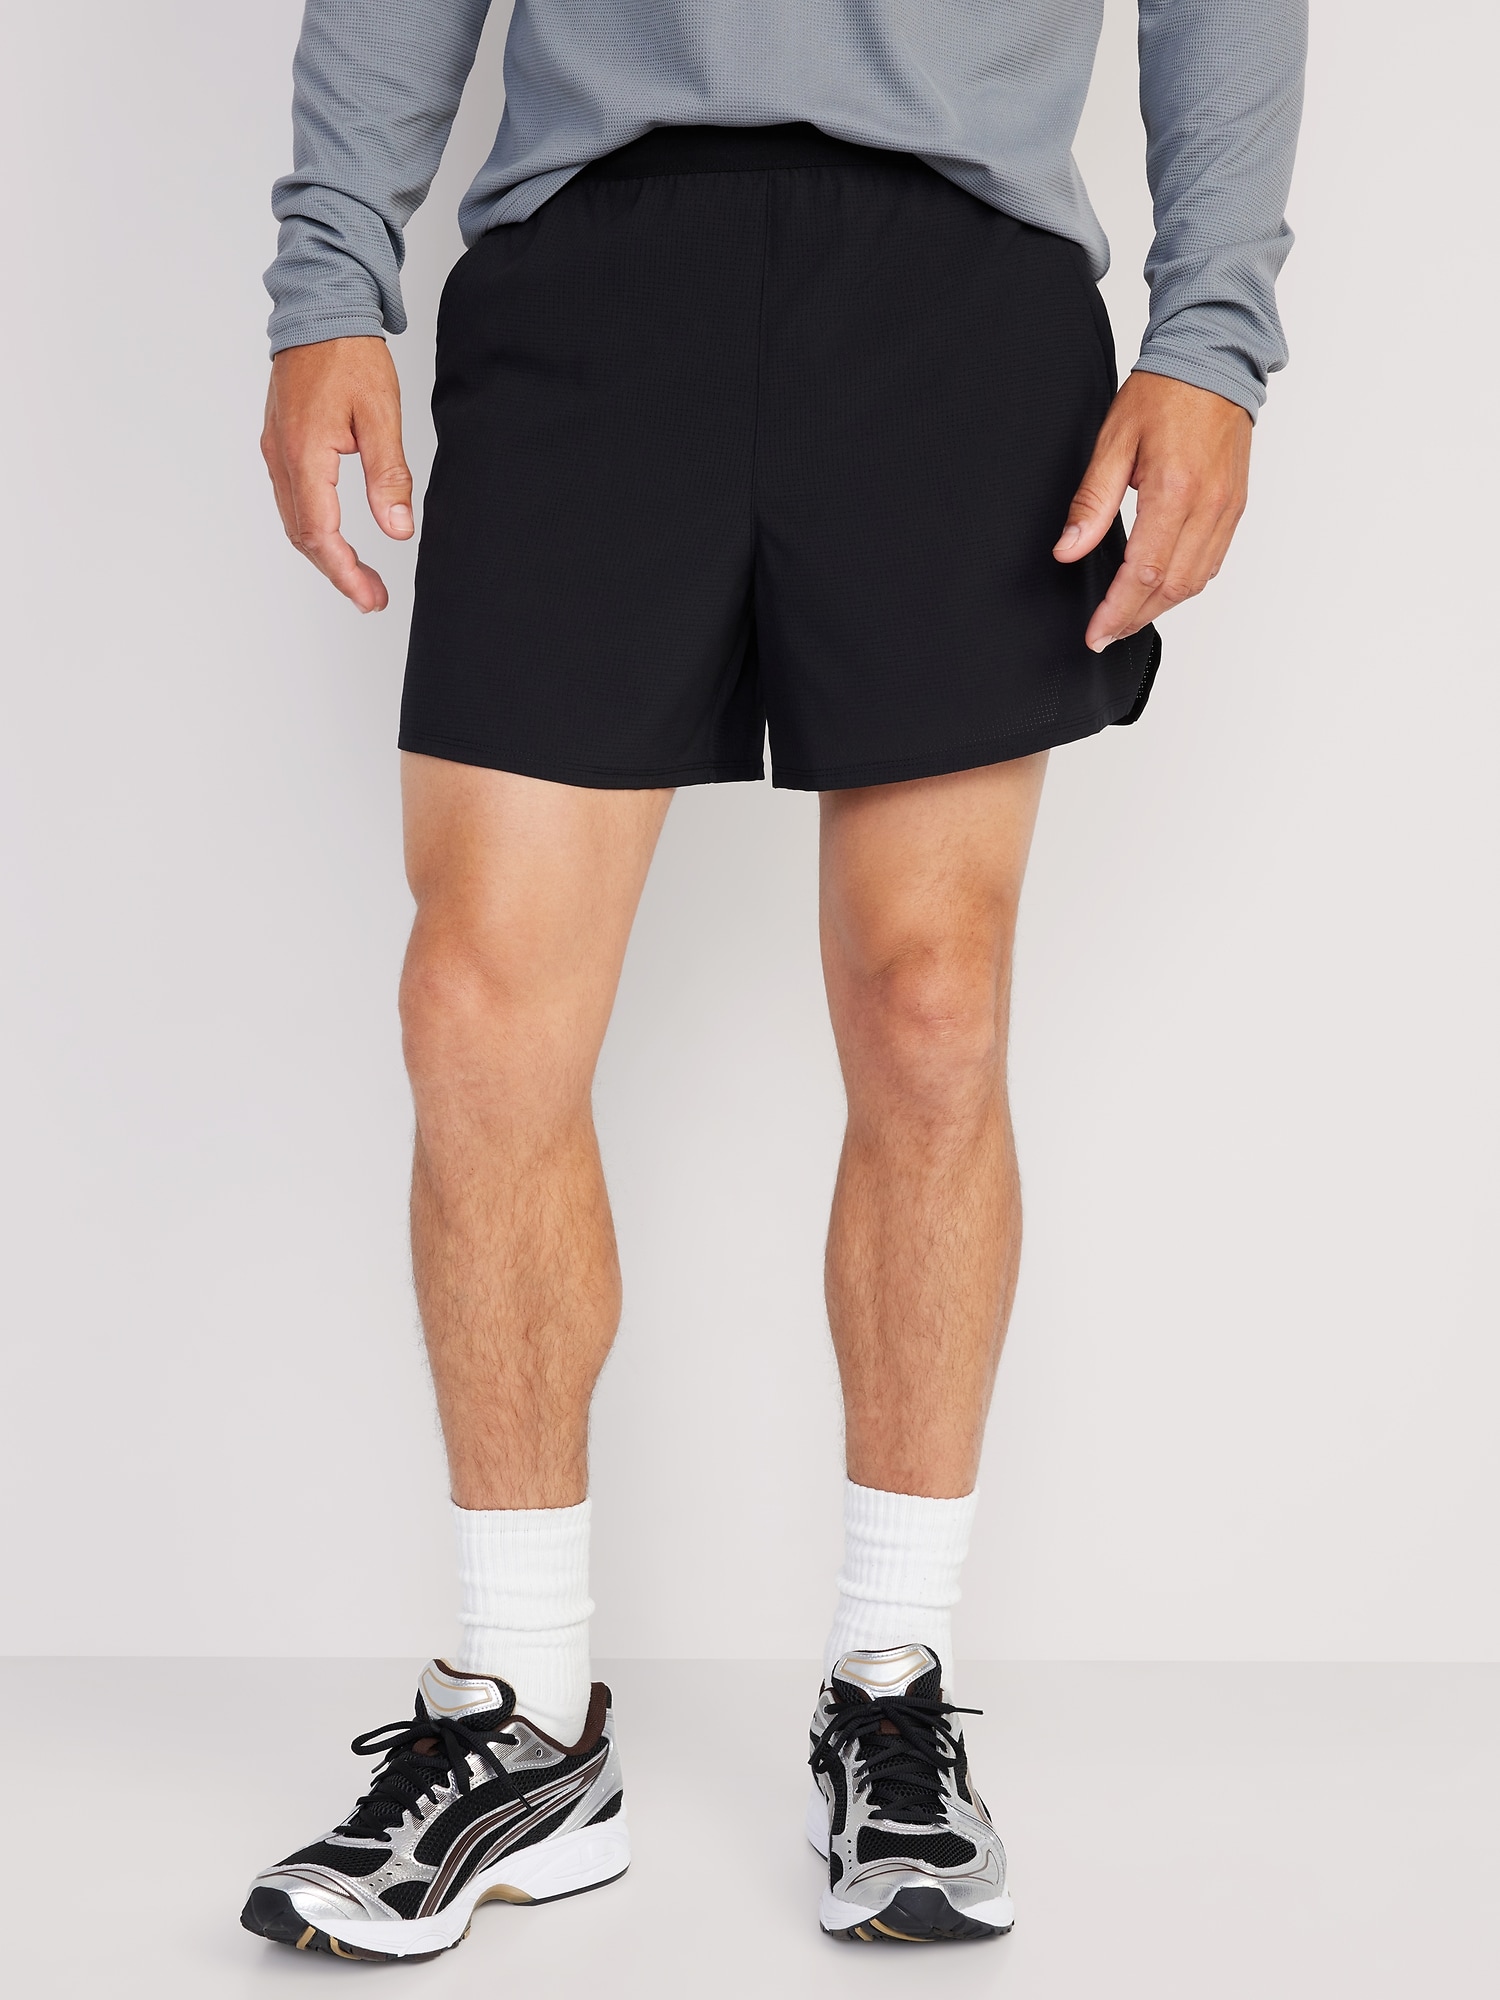 Vital 5 Inch Shorts